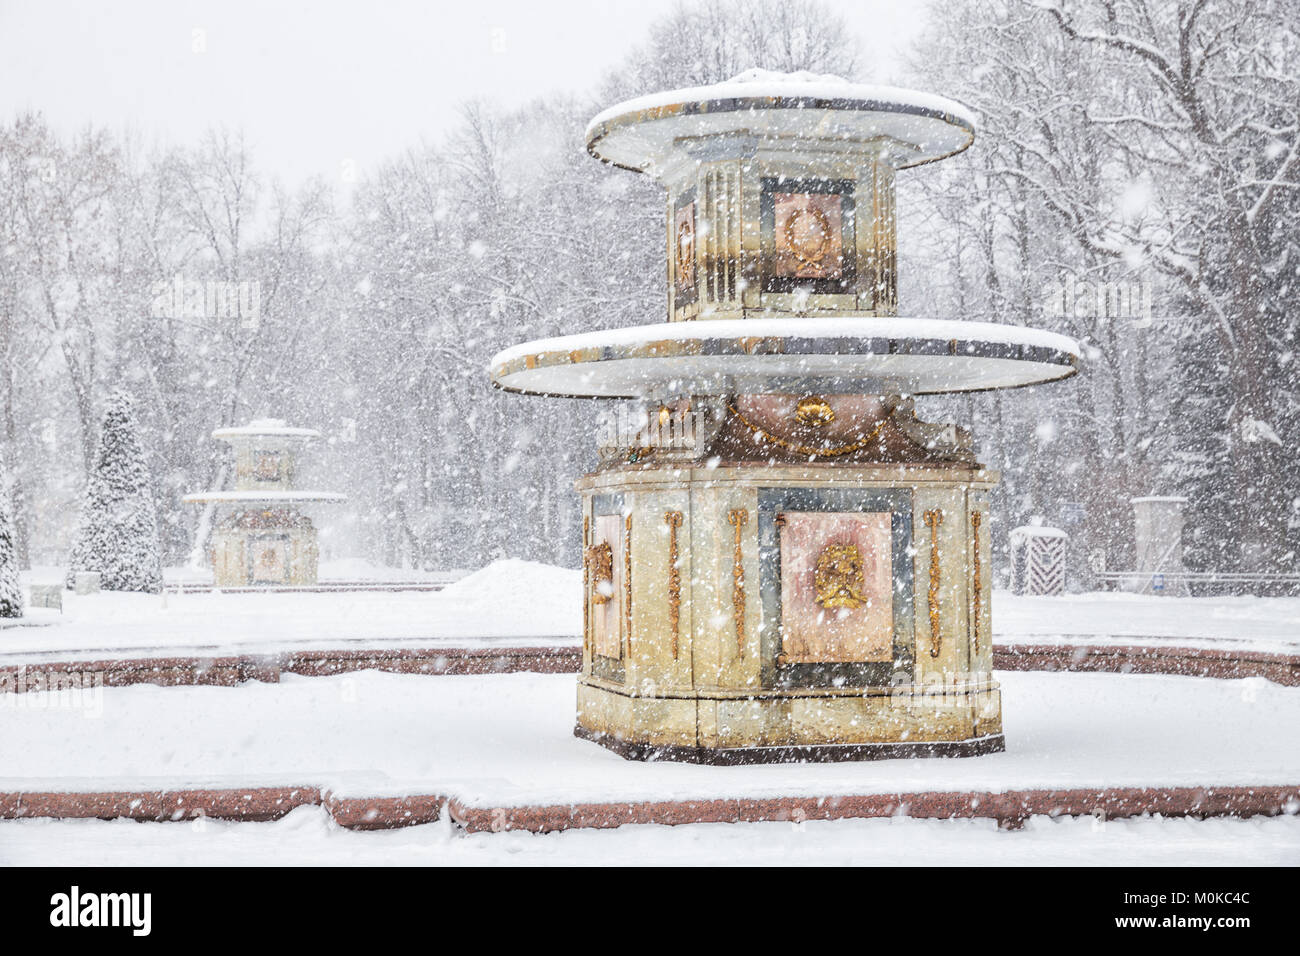 SAINT PETERSBURG, RUSSIA - JANUARY 22, 2018: Peterhof in winter. Roman fountains in the Lower Park of Peterhof in heavy snowfall Stock Photo